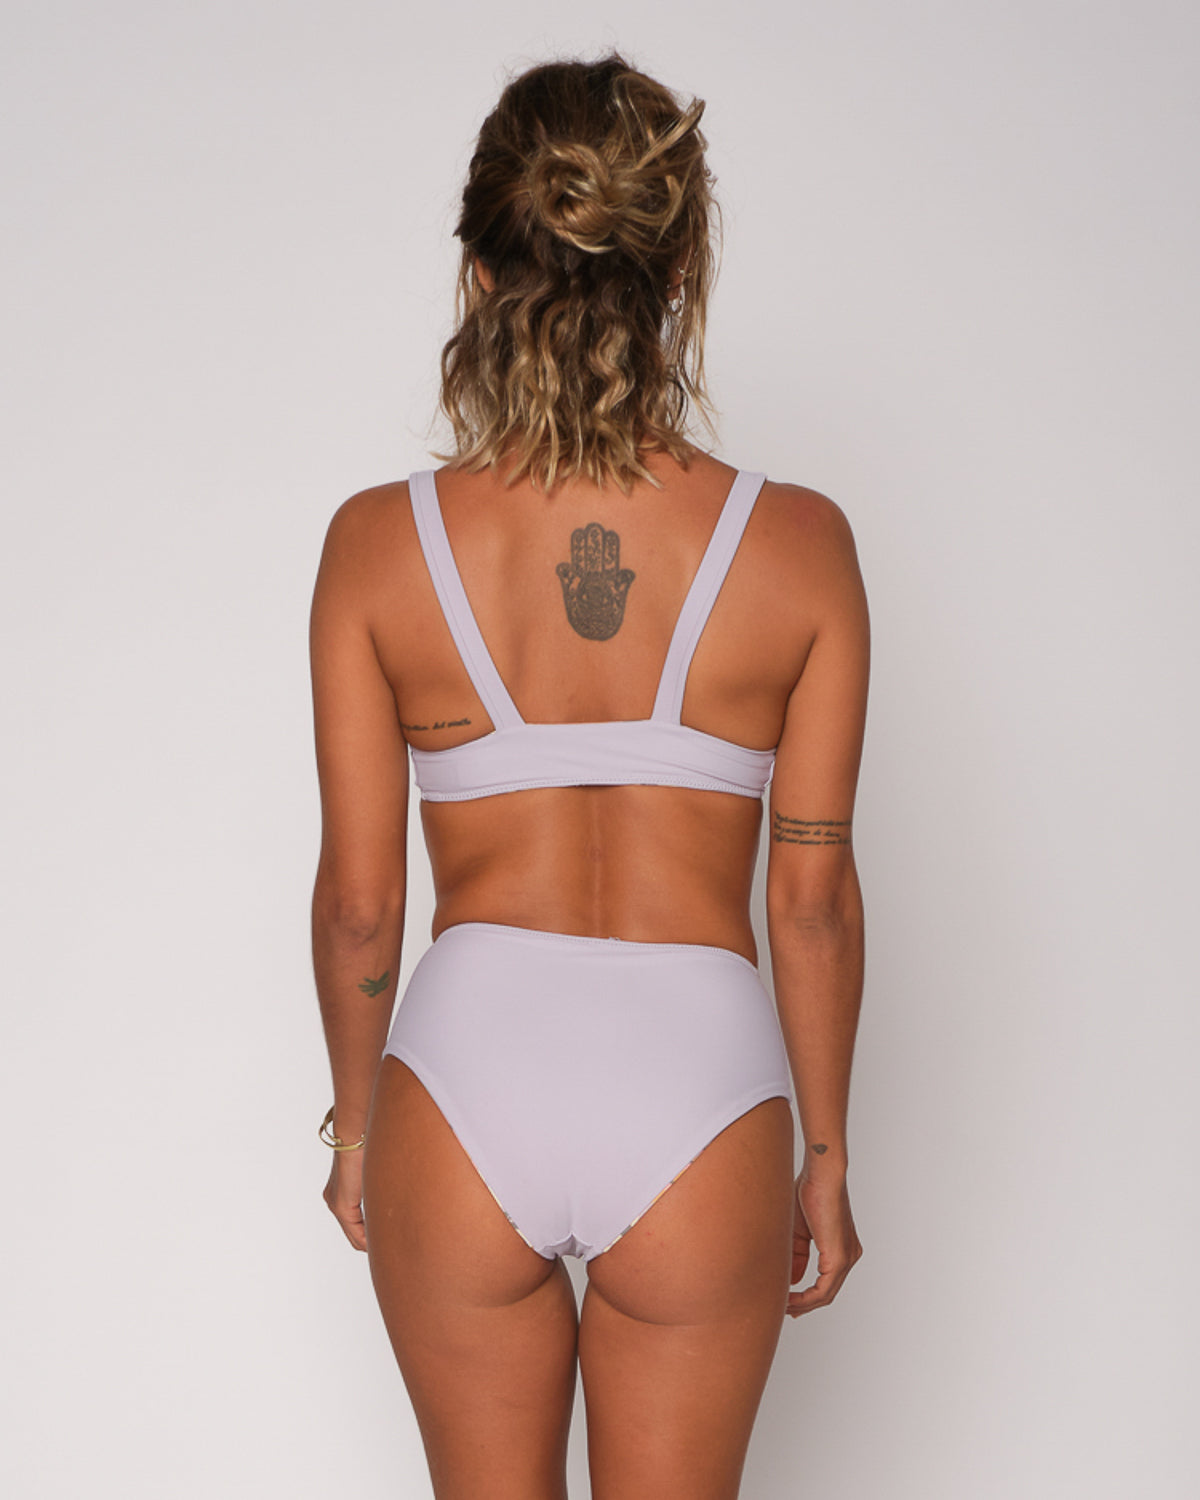 Brasilia Roma Multicolor Lavender Floral Pattern Reversible Bikini Swim Suit Sun Protection